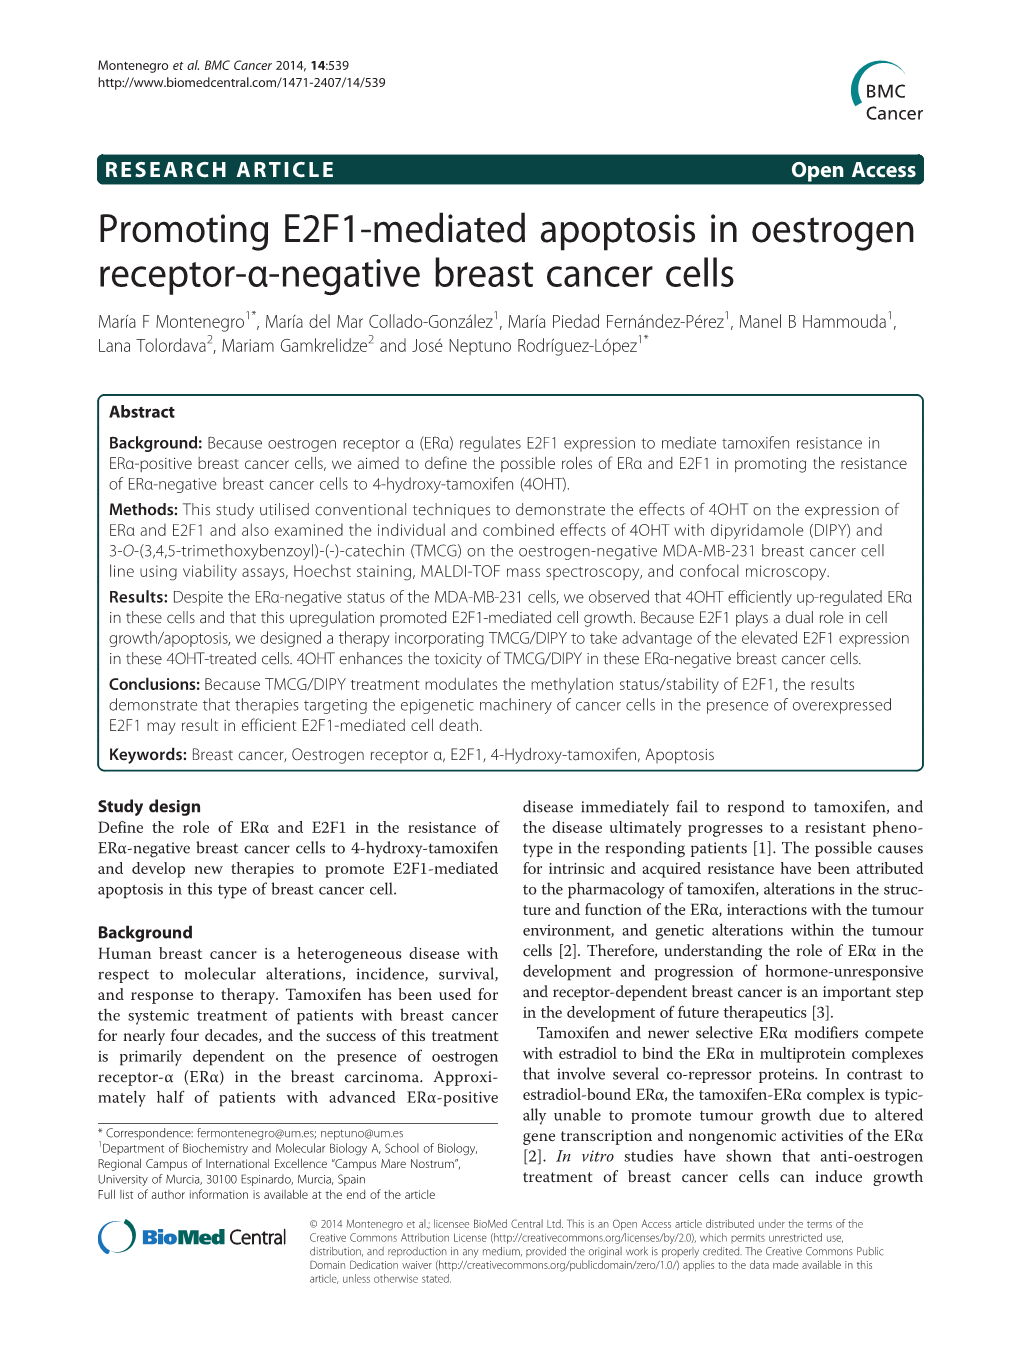 Promoting E2F1-Mediated Apoptosis in Oestrogen Receptor-Α-Negative